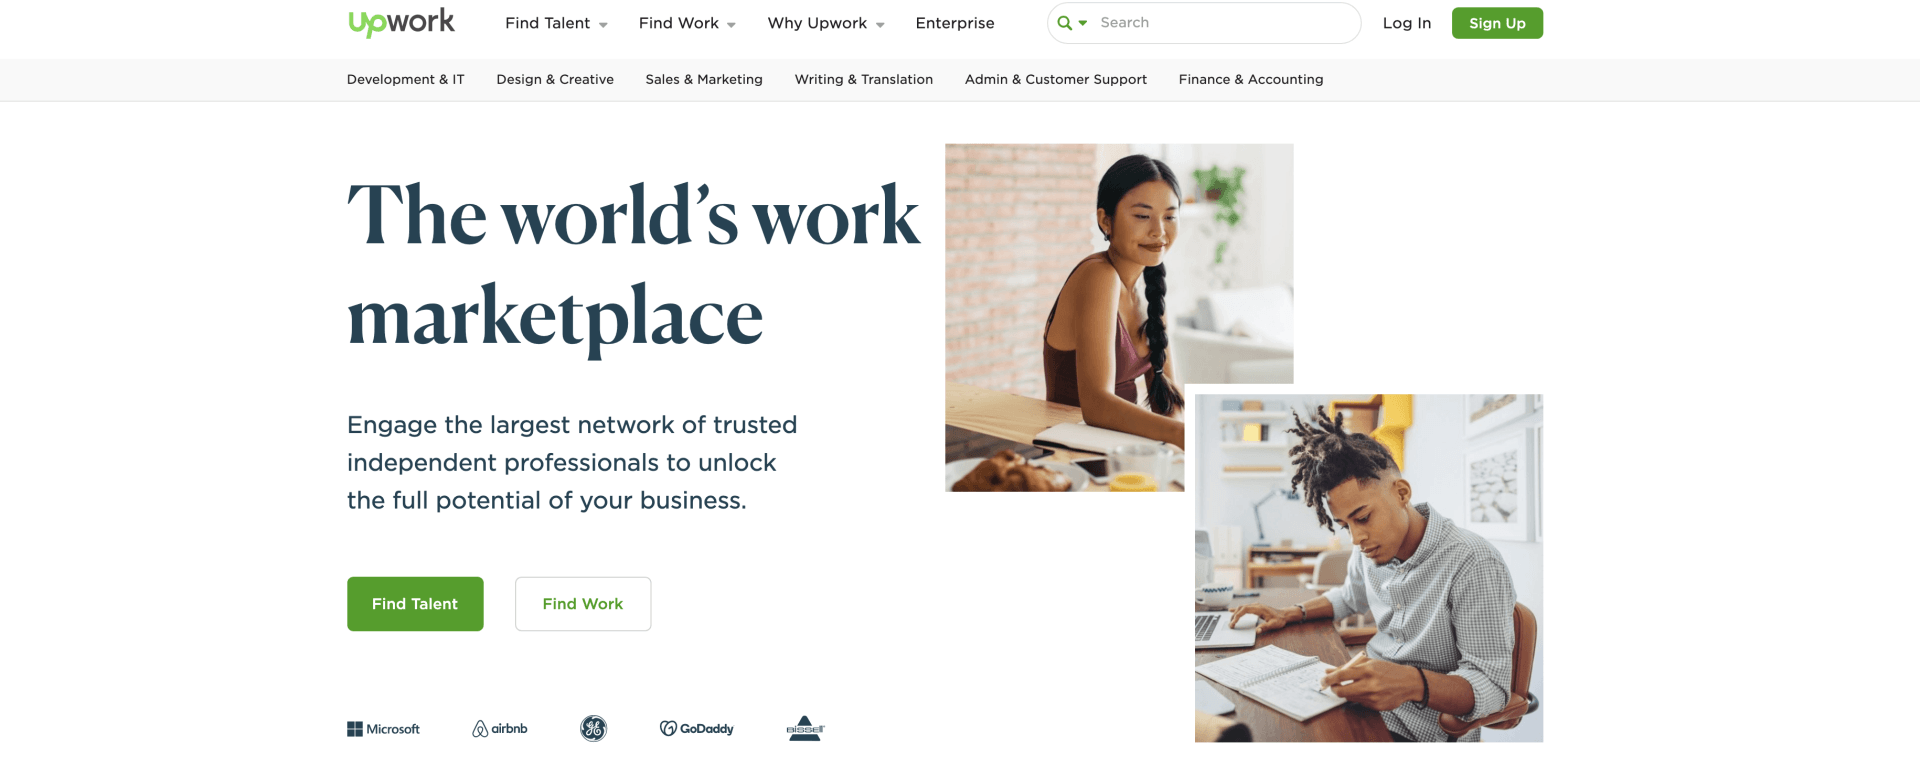 upwork profile as a freelancer